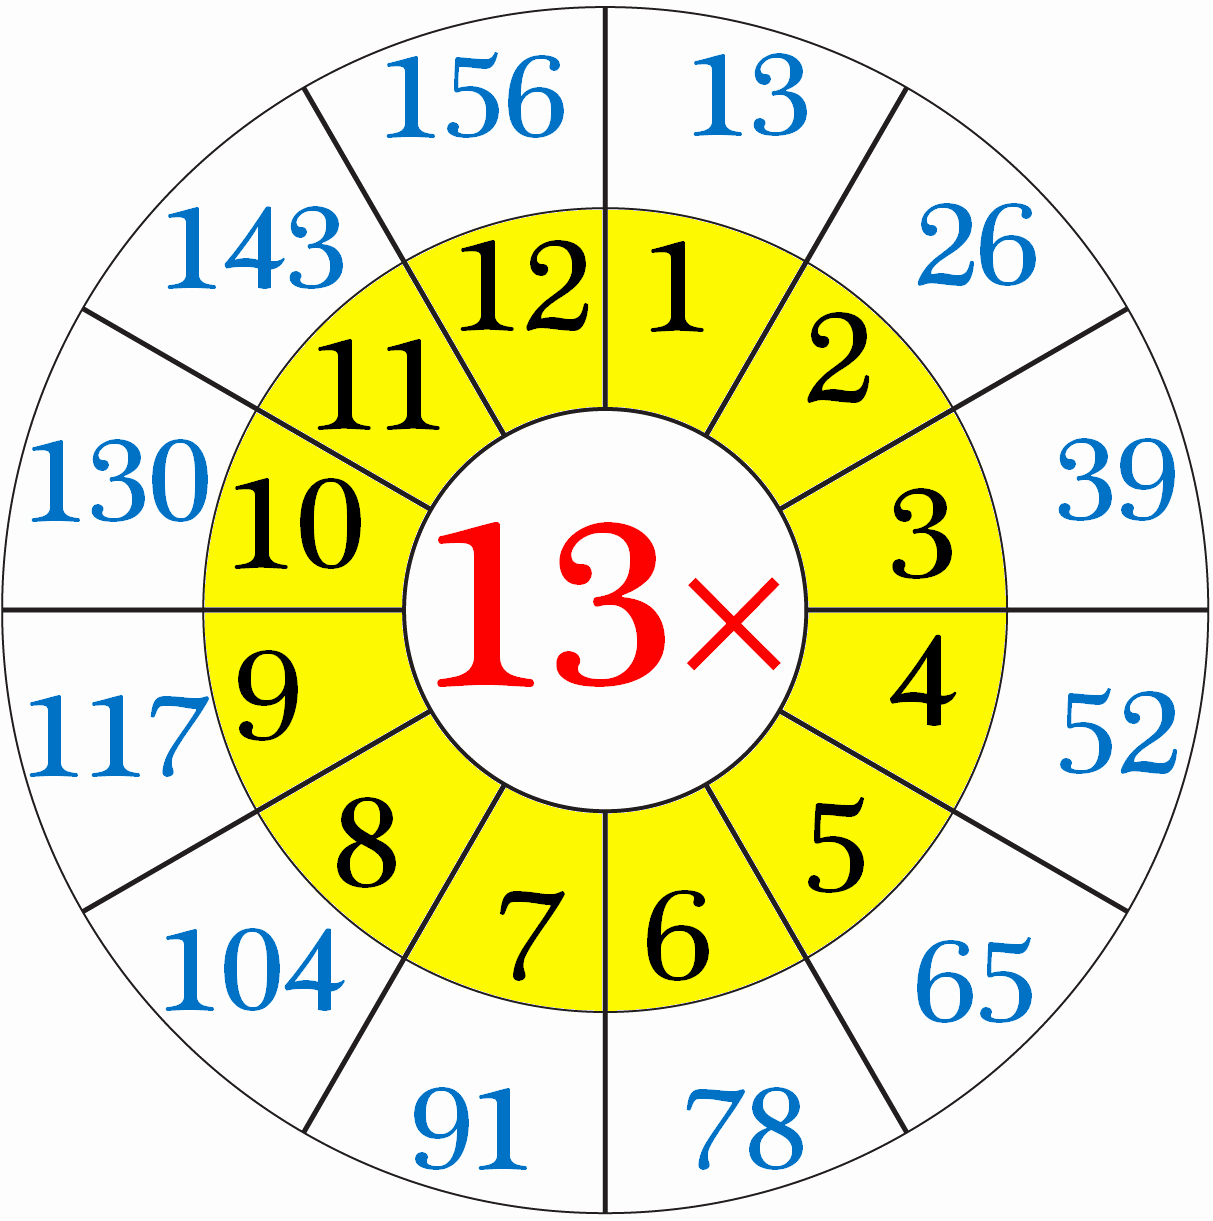 6 Times Table Worksheet Elegant Worksheet On Multiplication Table Of 13